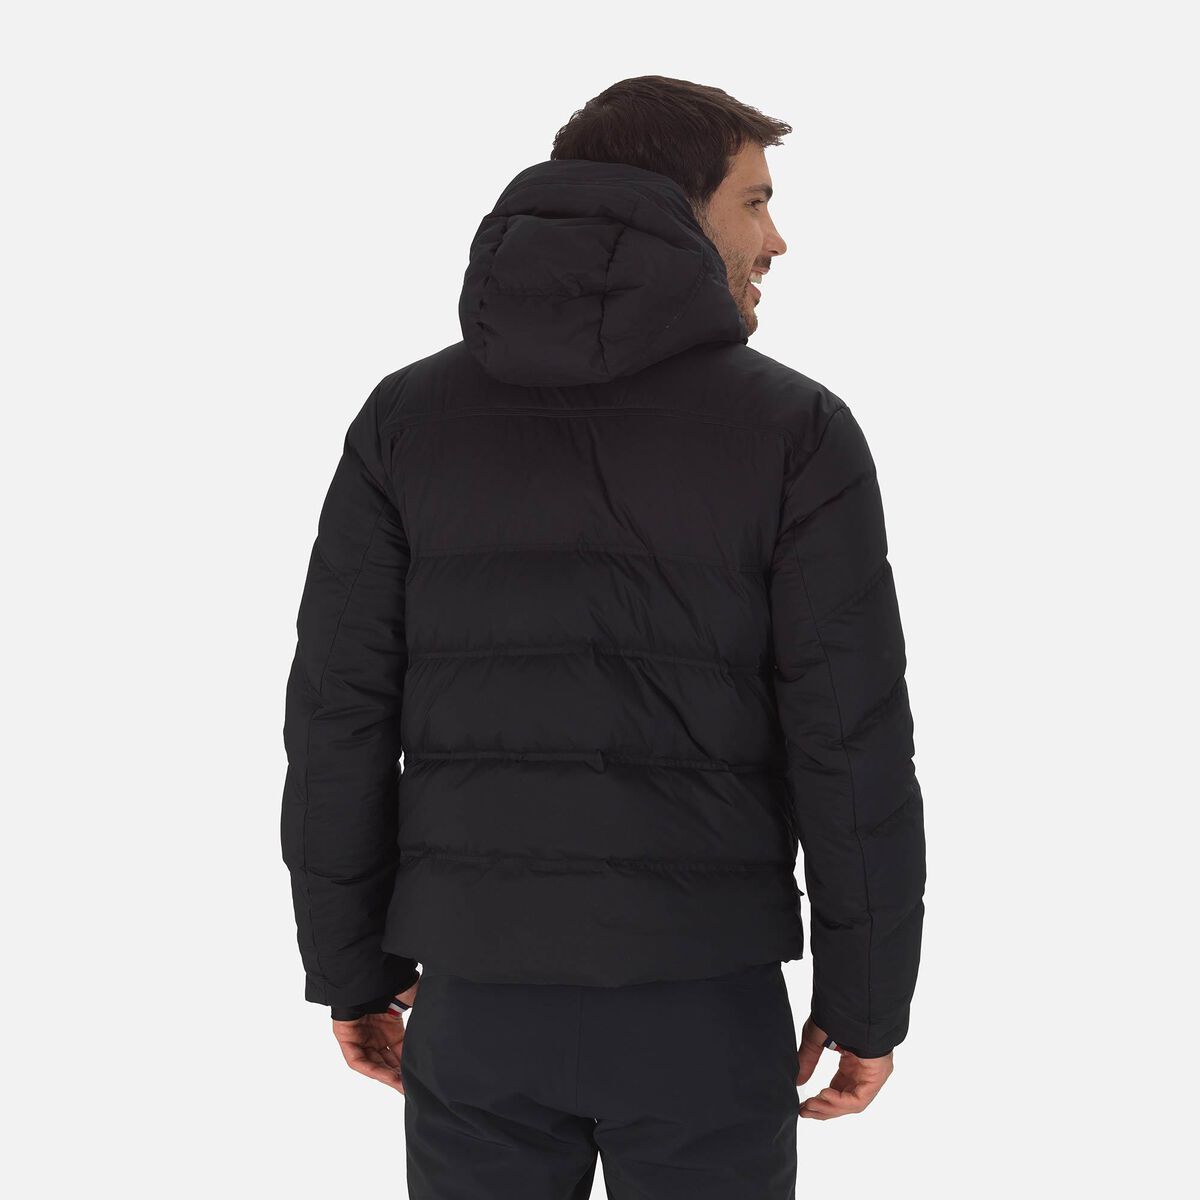 Men's Merino Wool Fleece - Ski Warm 500 Black